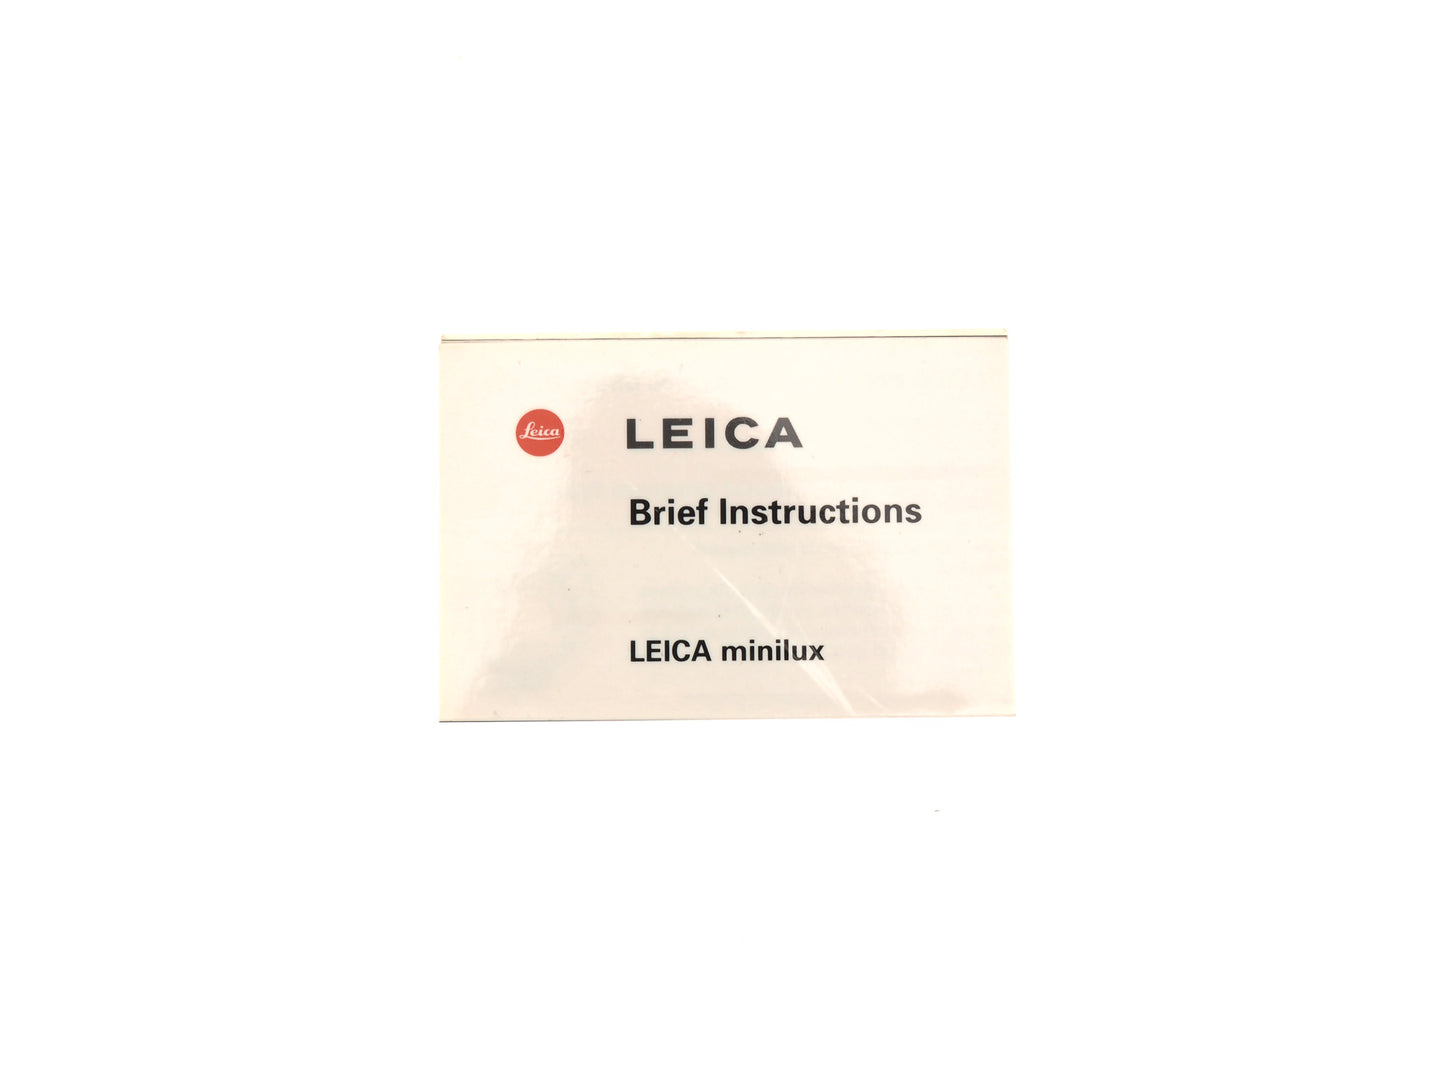 Leica Minilux Brief Instructions